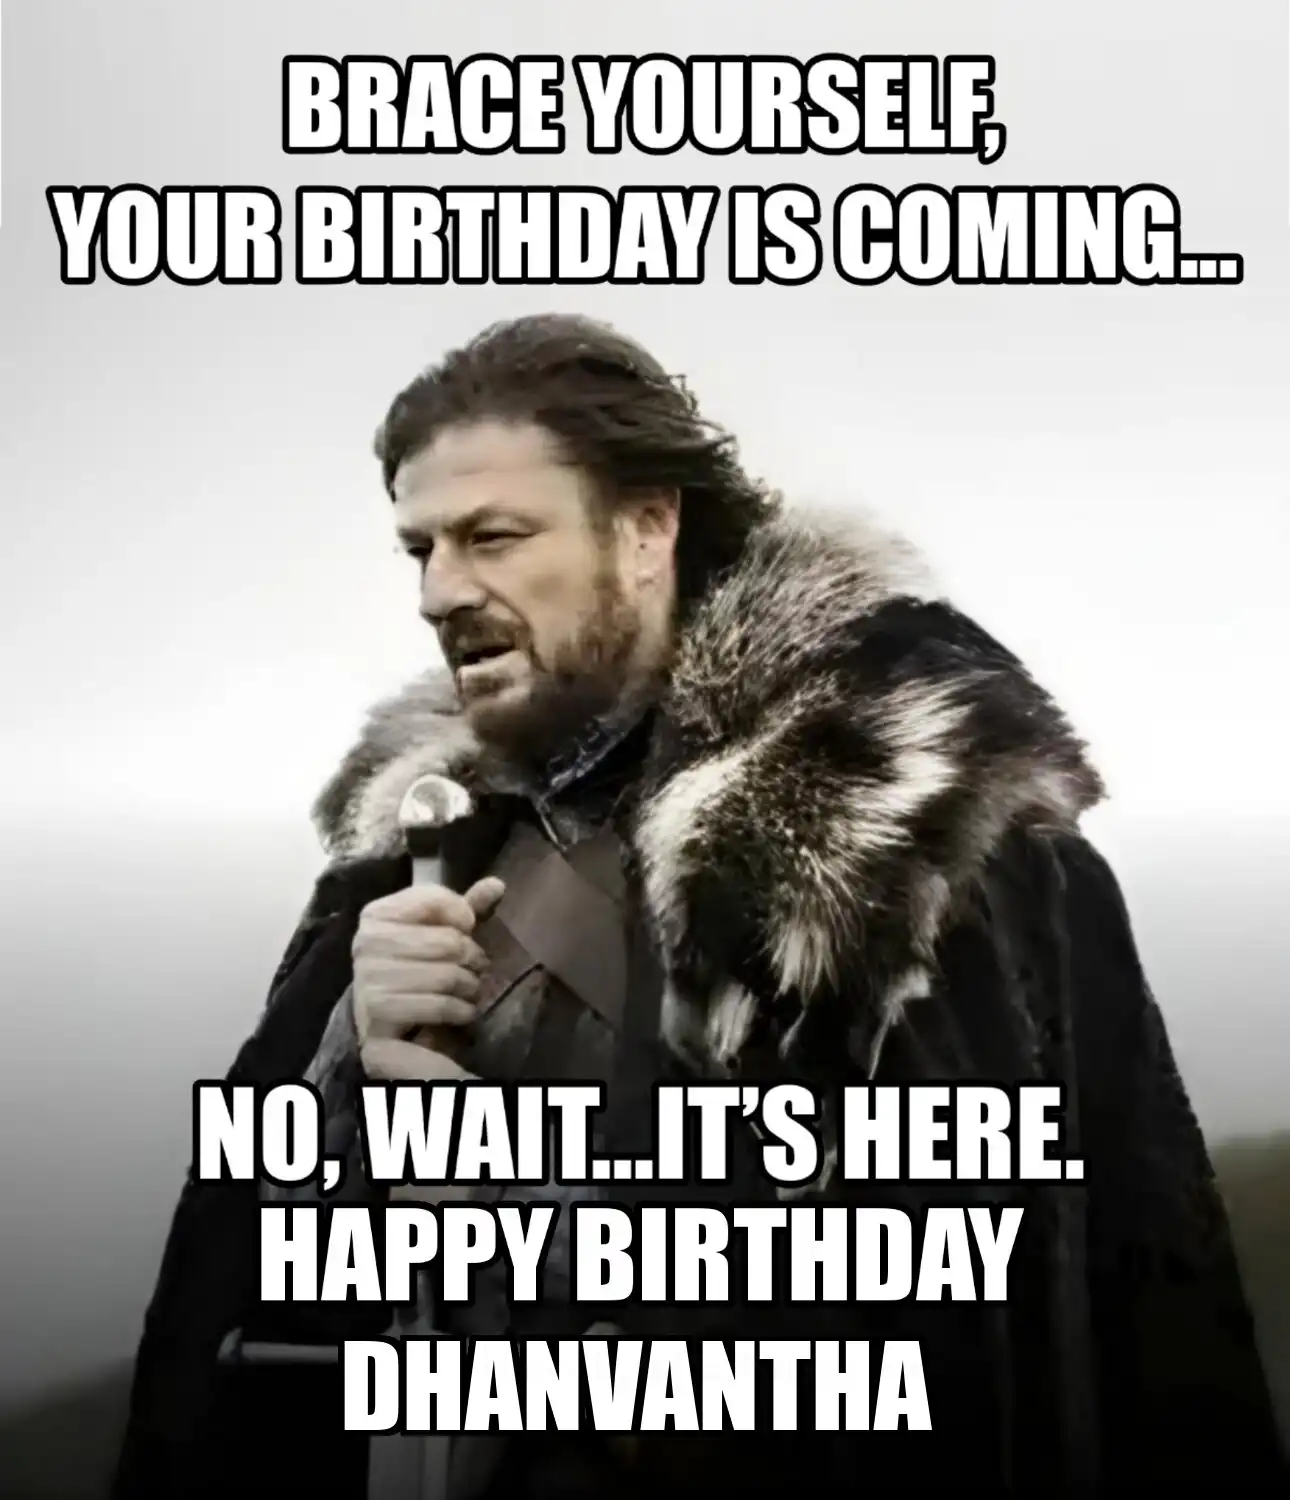 Happy Birthday Dhanvantha Brace Yourself Your Birthday Is Coming Meme